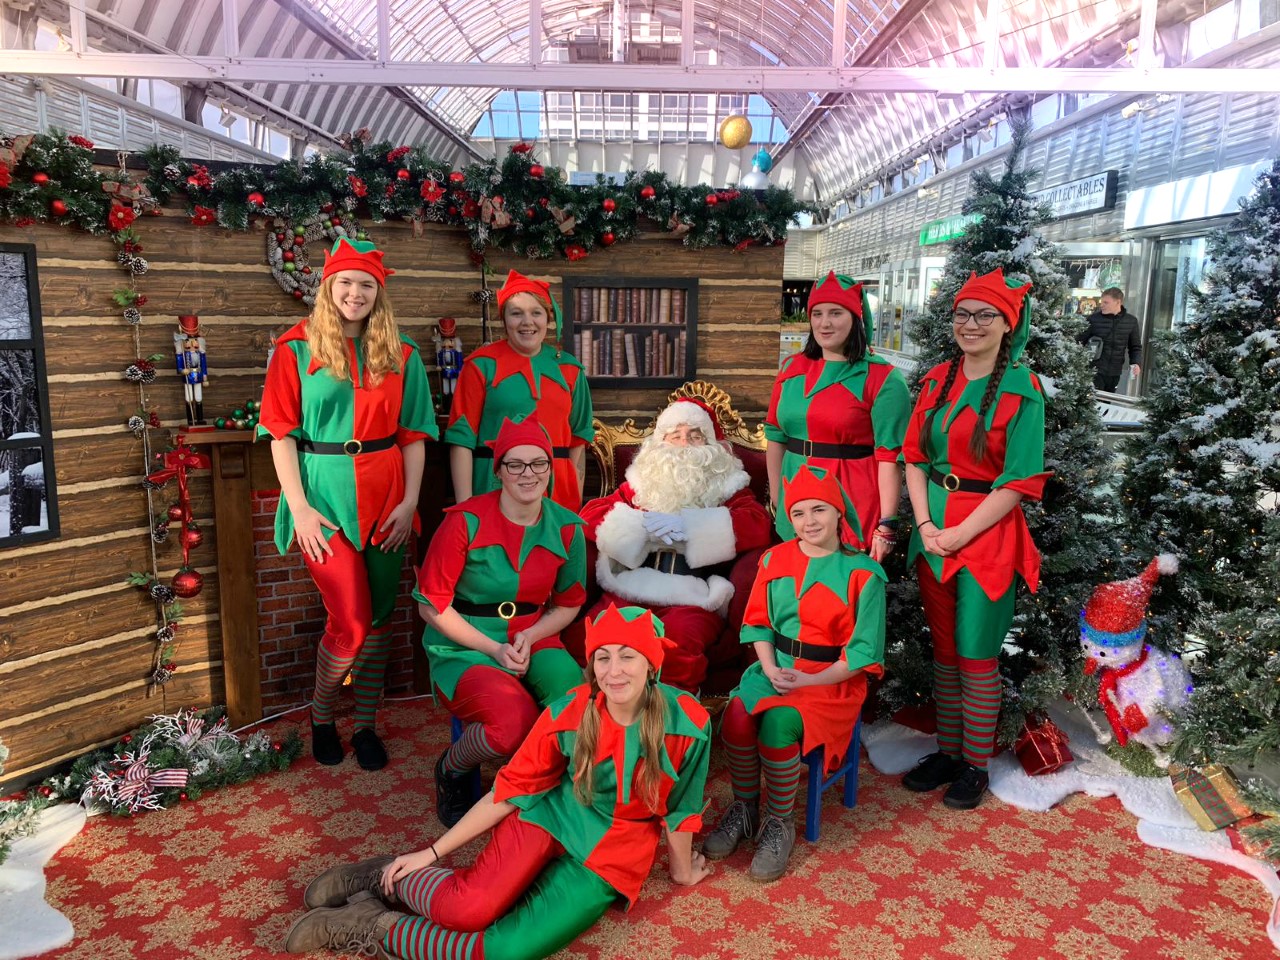 Santa kicks off Christmas at The Brunel Shopping Centre